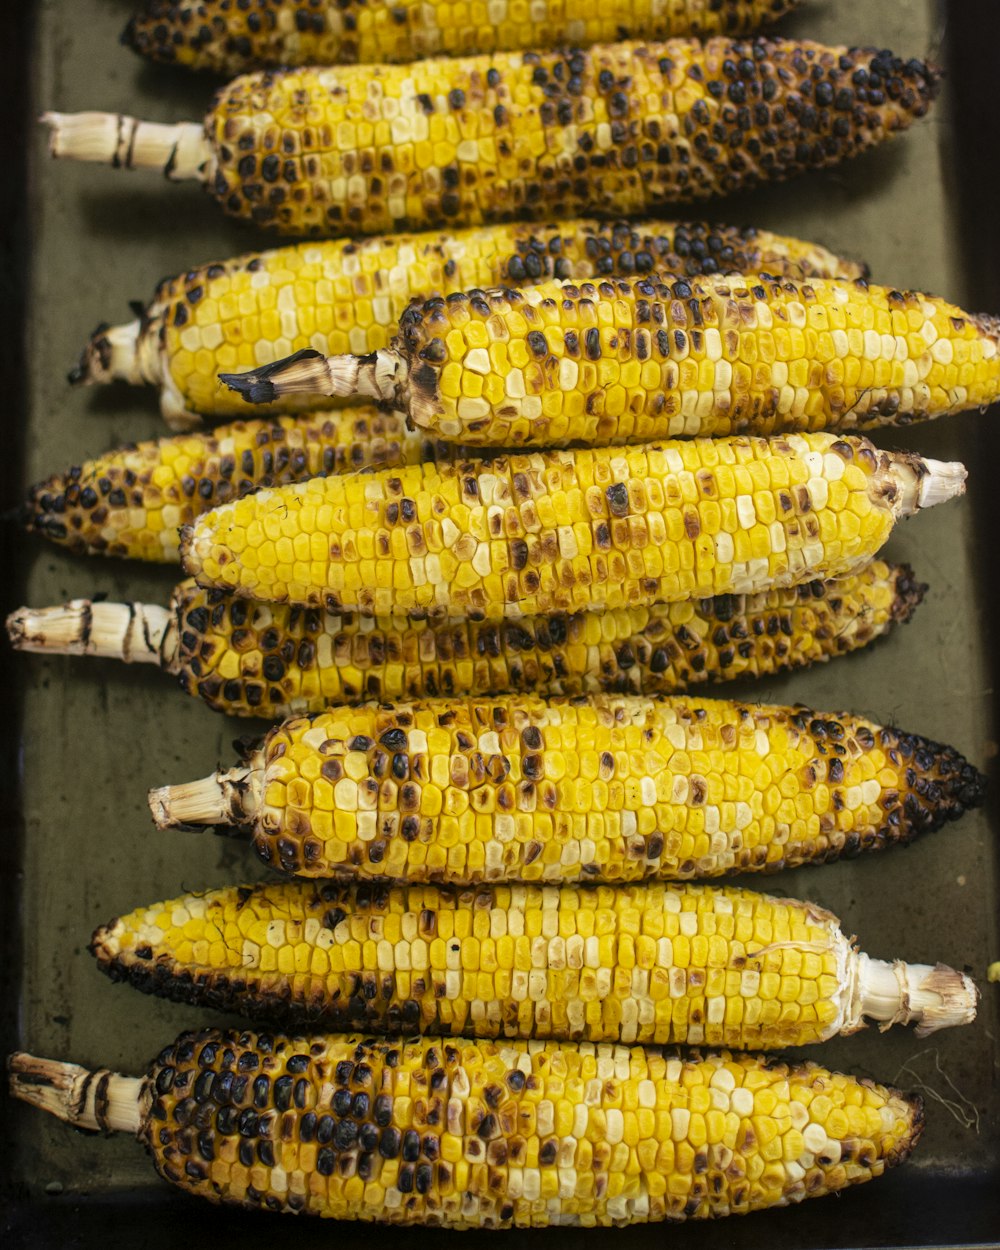 grilled corns